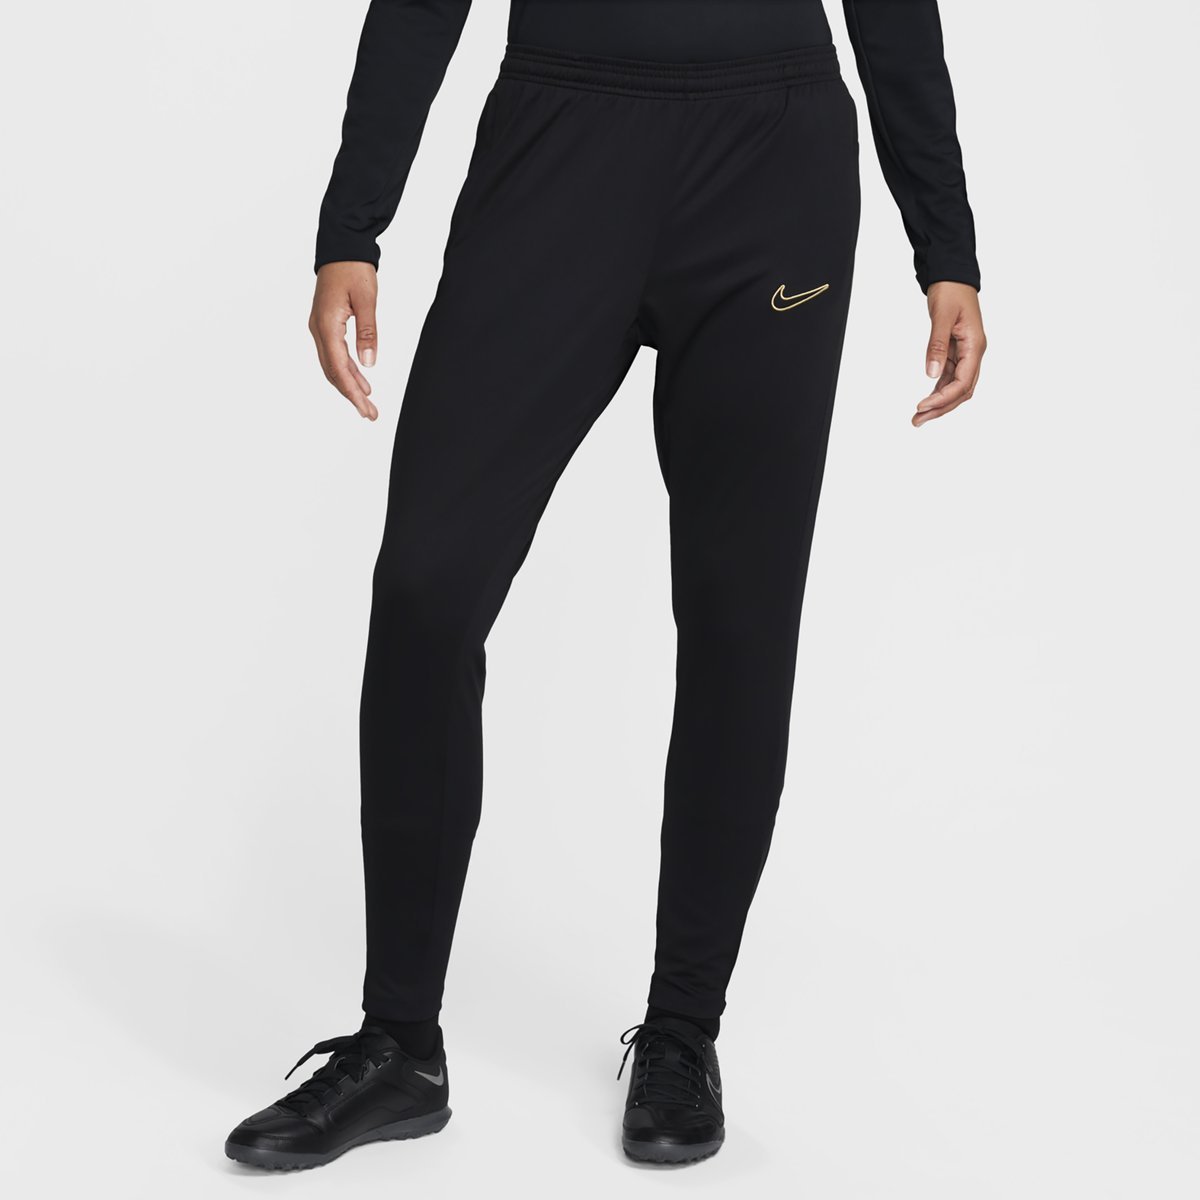 Women's Nike Grey Sport Legging Trackbottoms, Size L